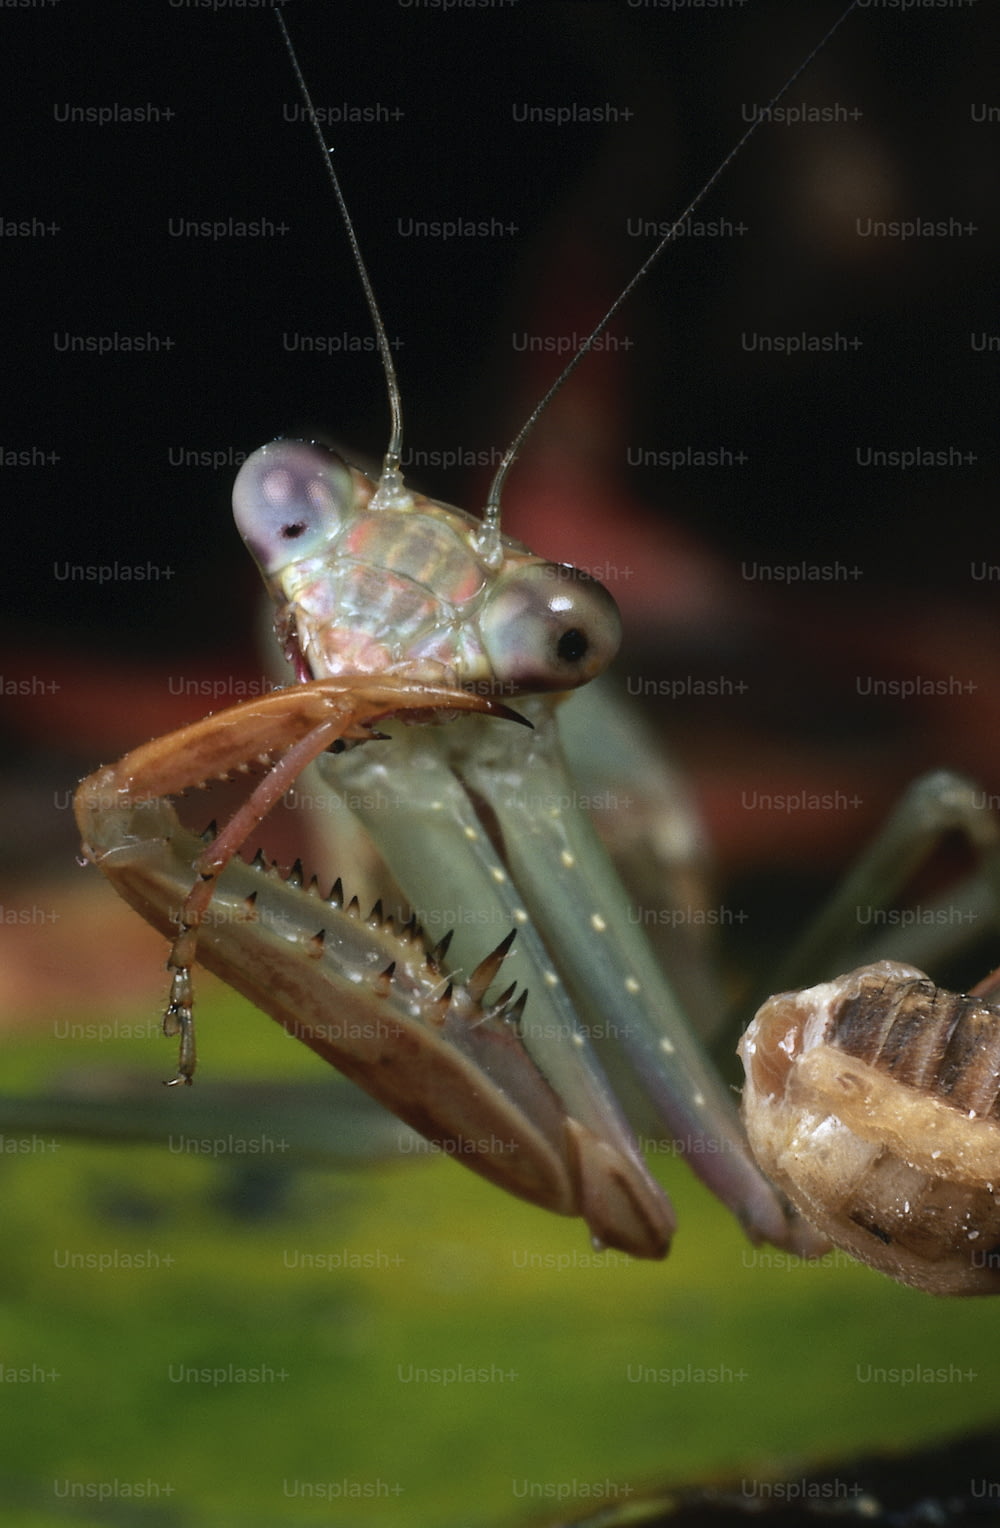 a close up of a praying mantissa